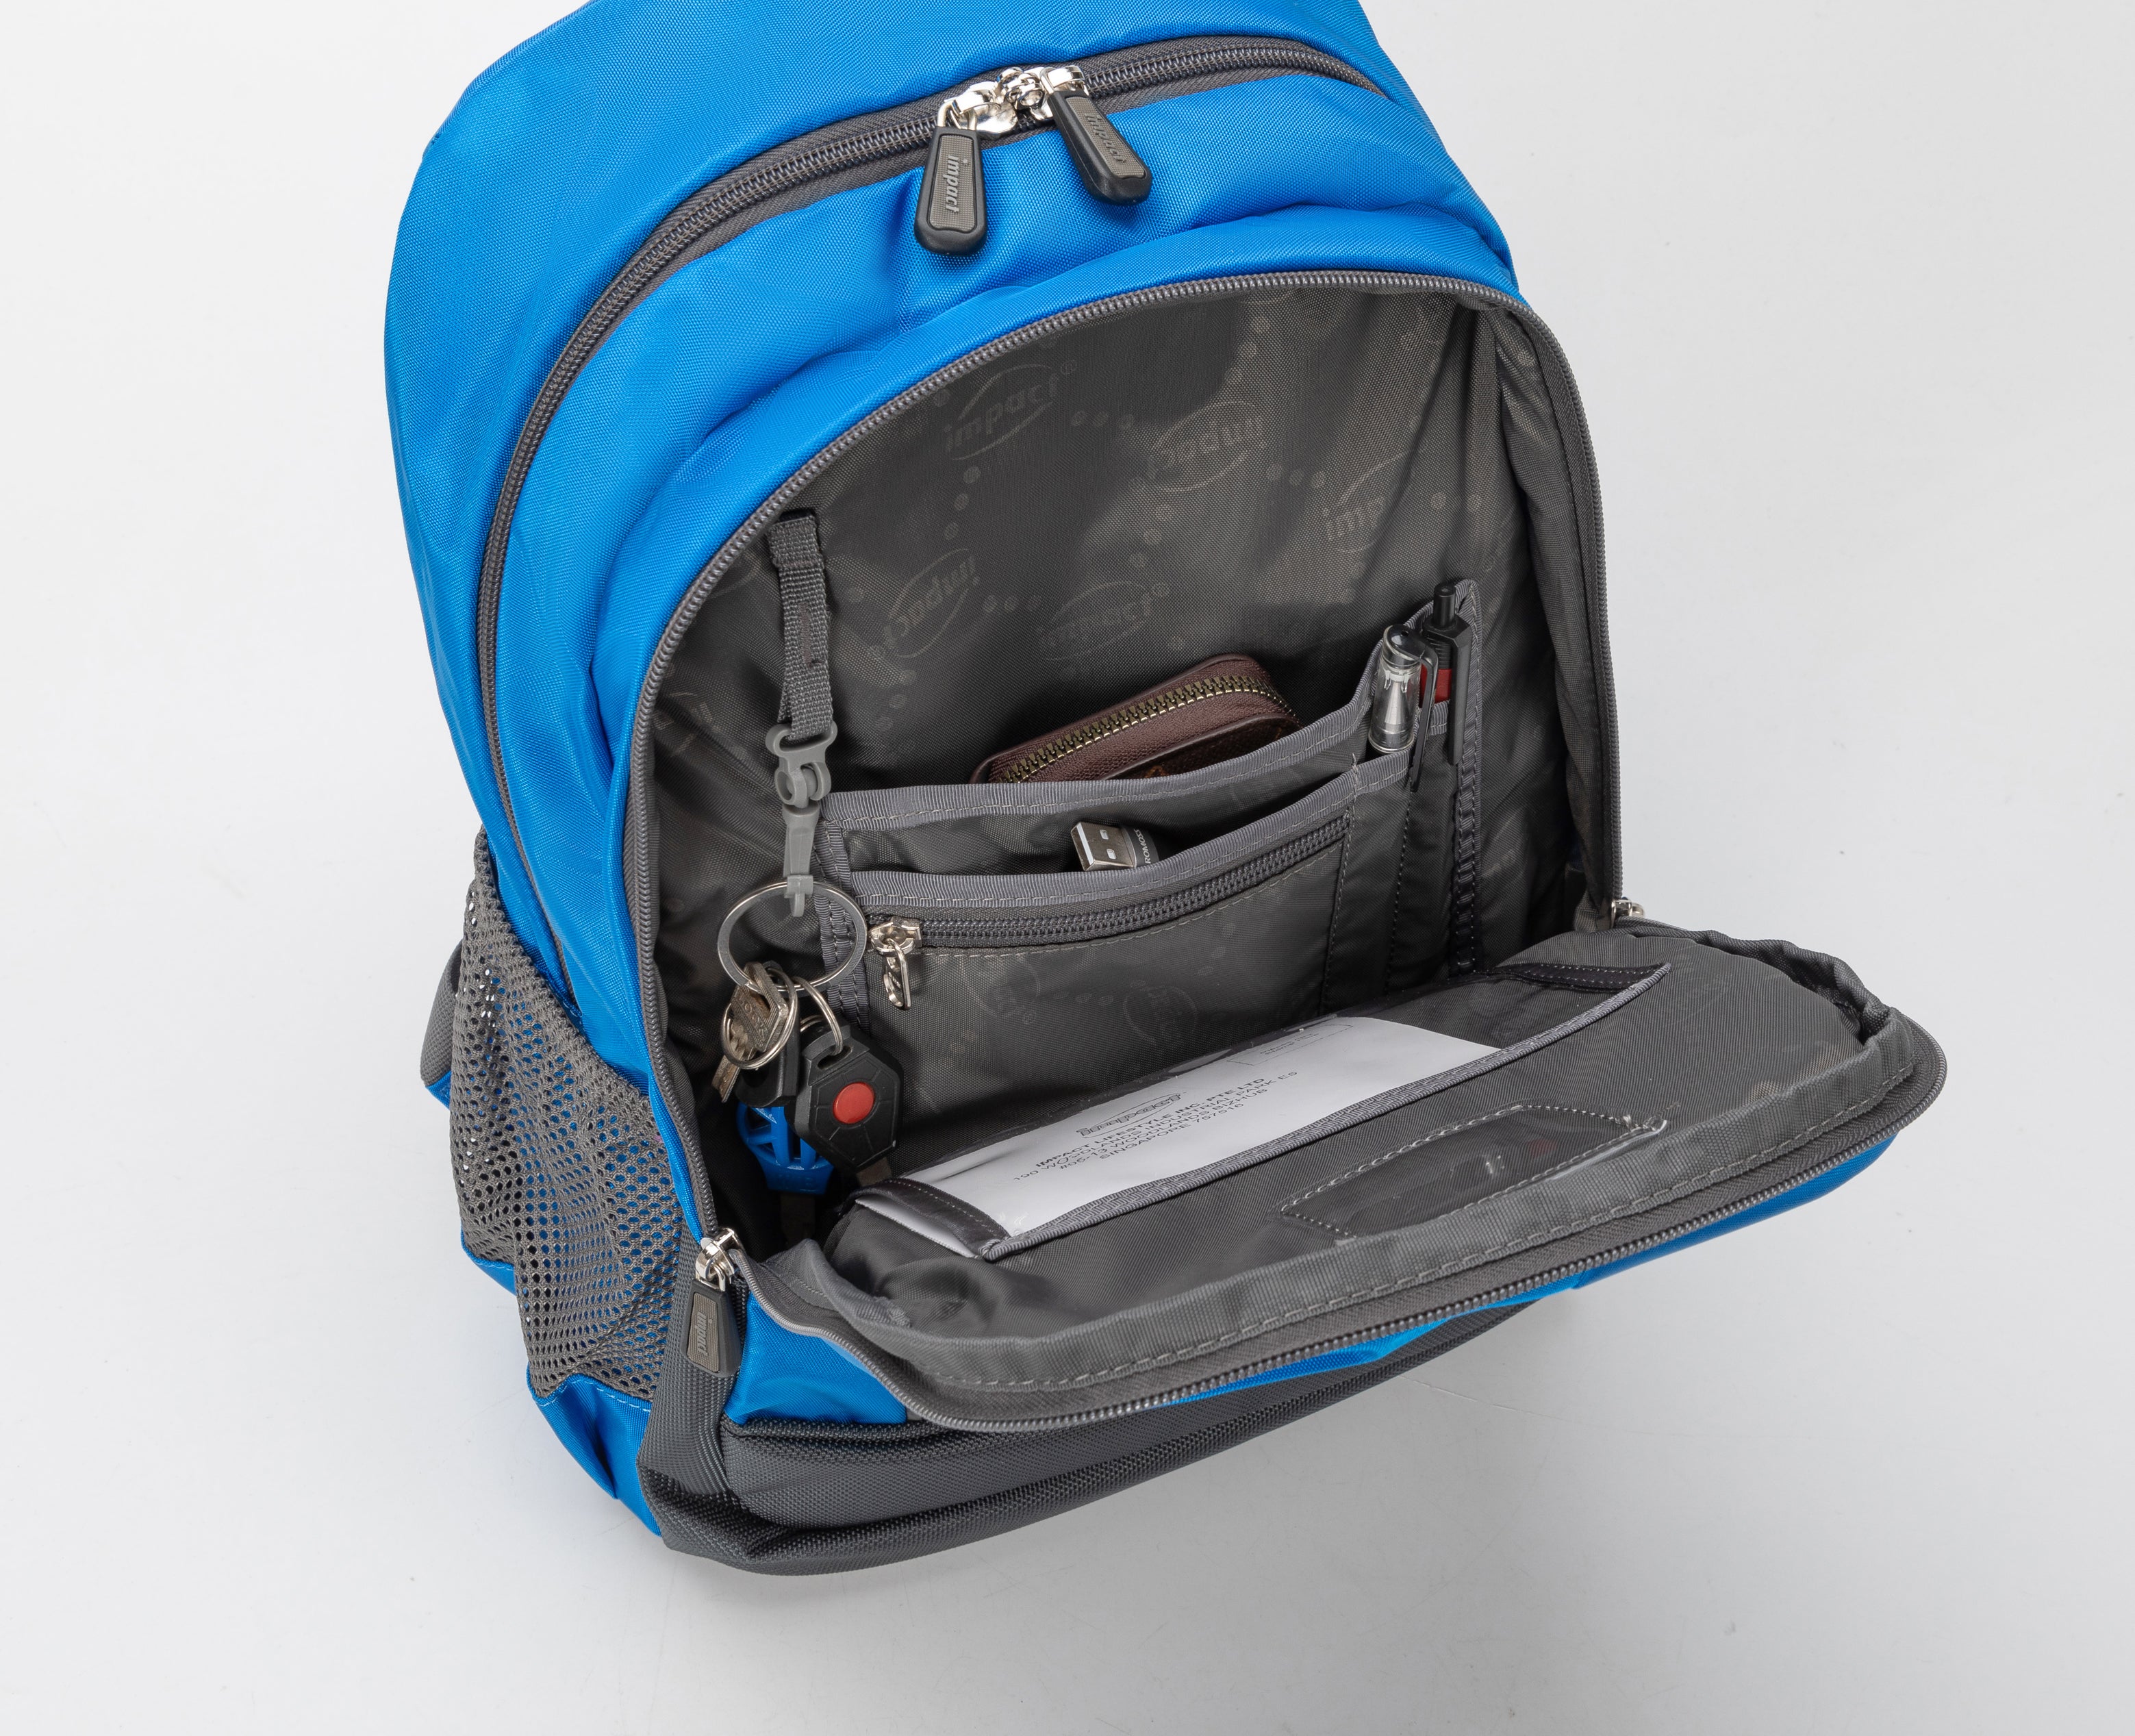 Impact School Bag IPEG-167 - Impact School Bag Ergo Active Backpack